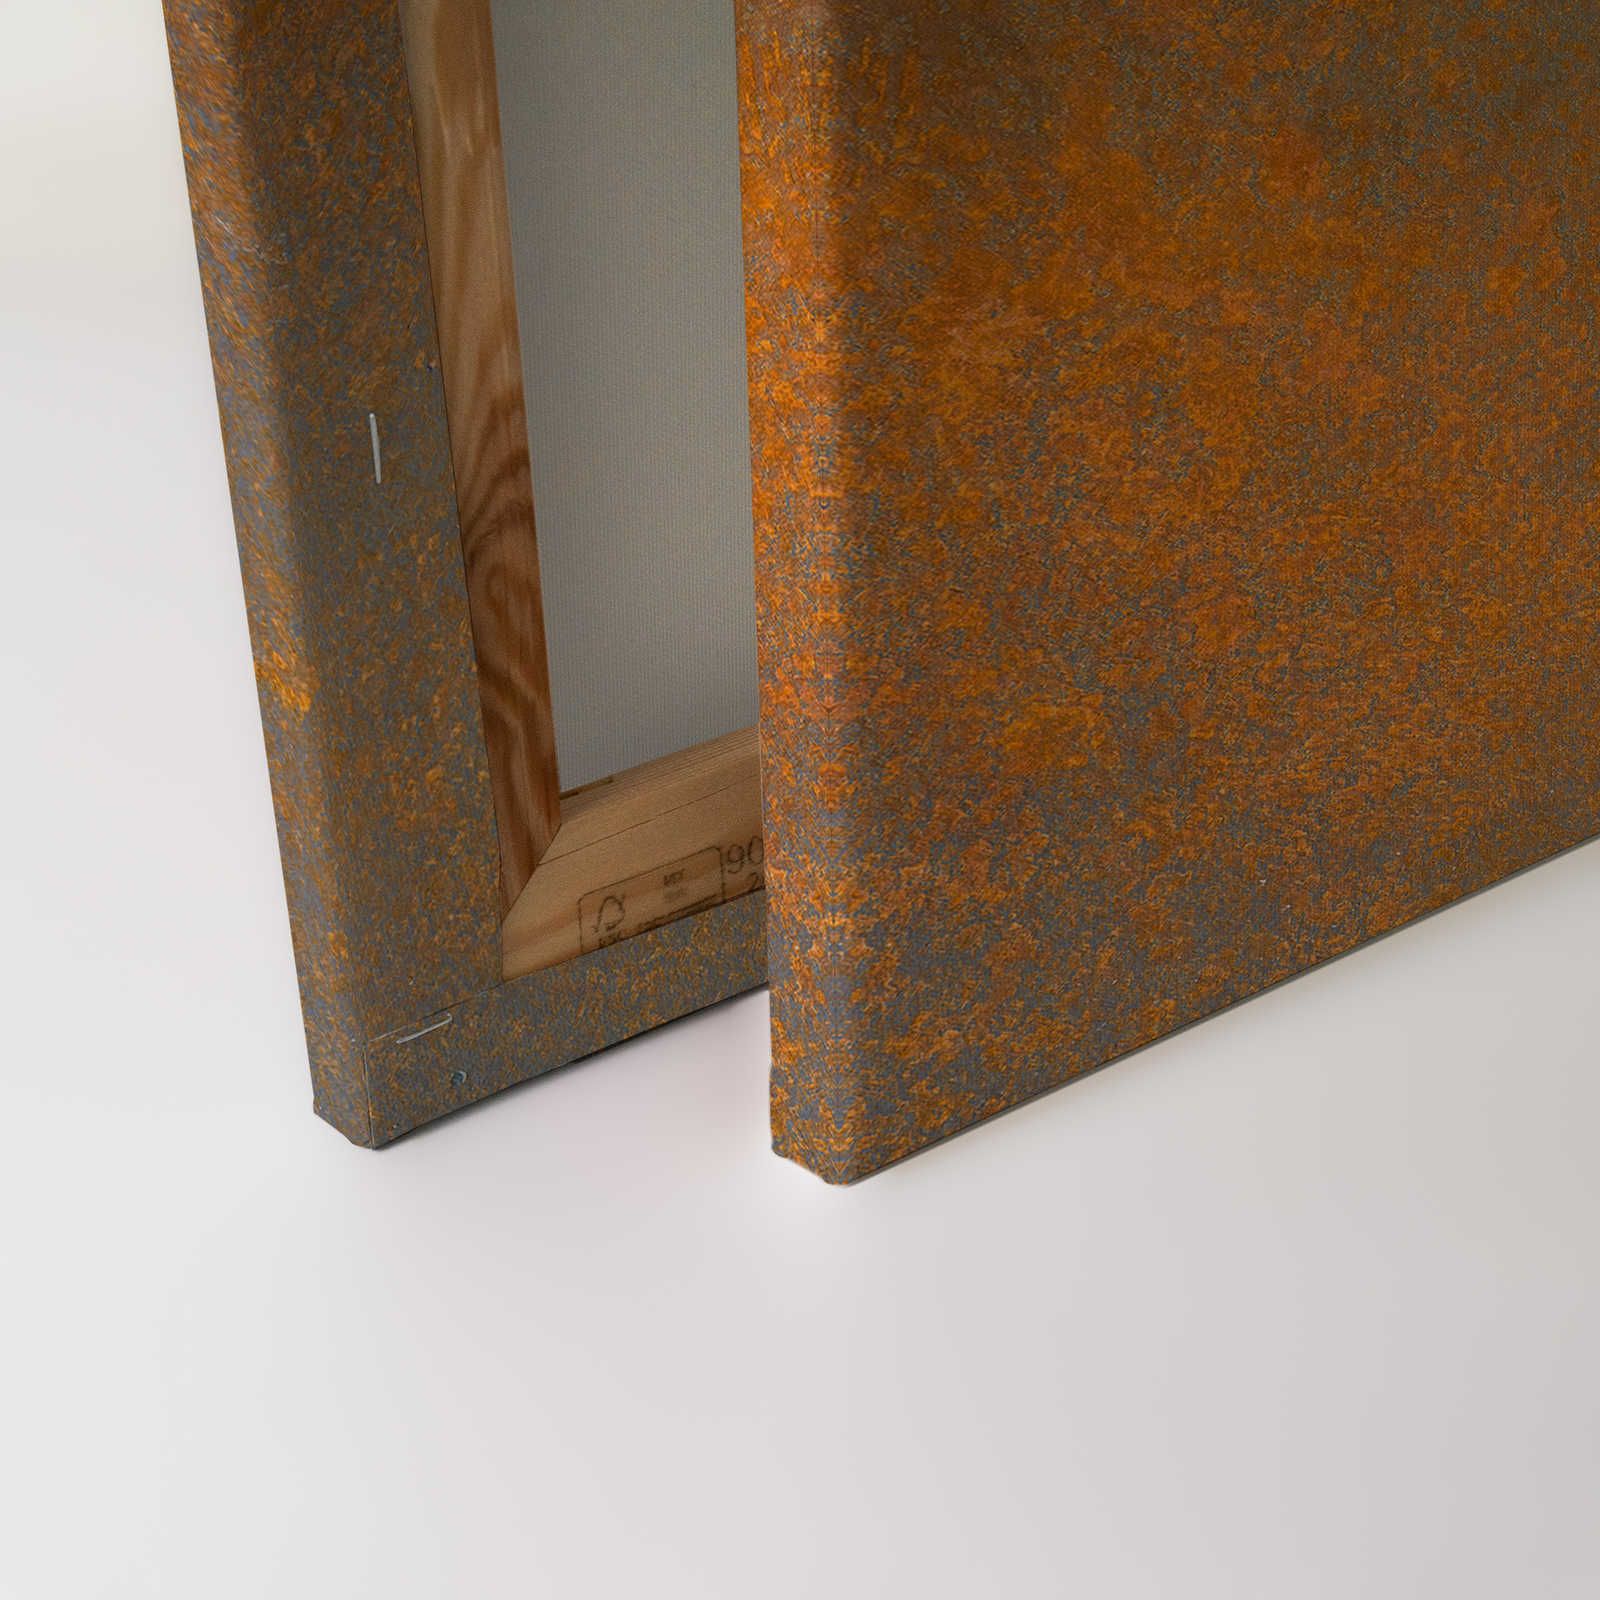             Rust Optics Canvas Painting Orange Brown with Used Look - 0.90 m x 0.60 m
        